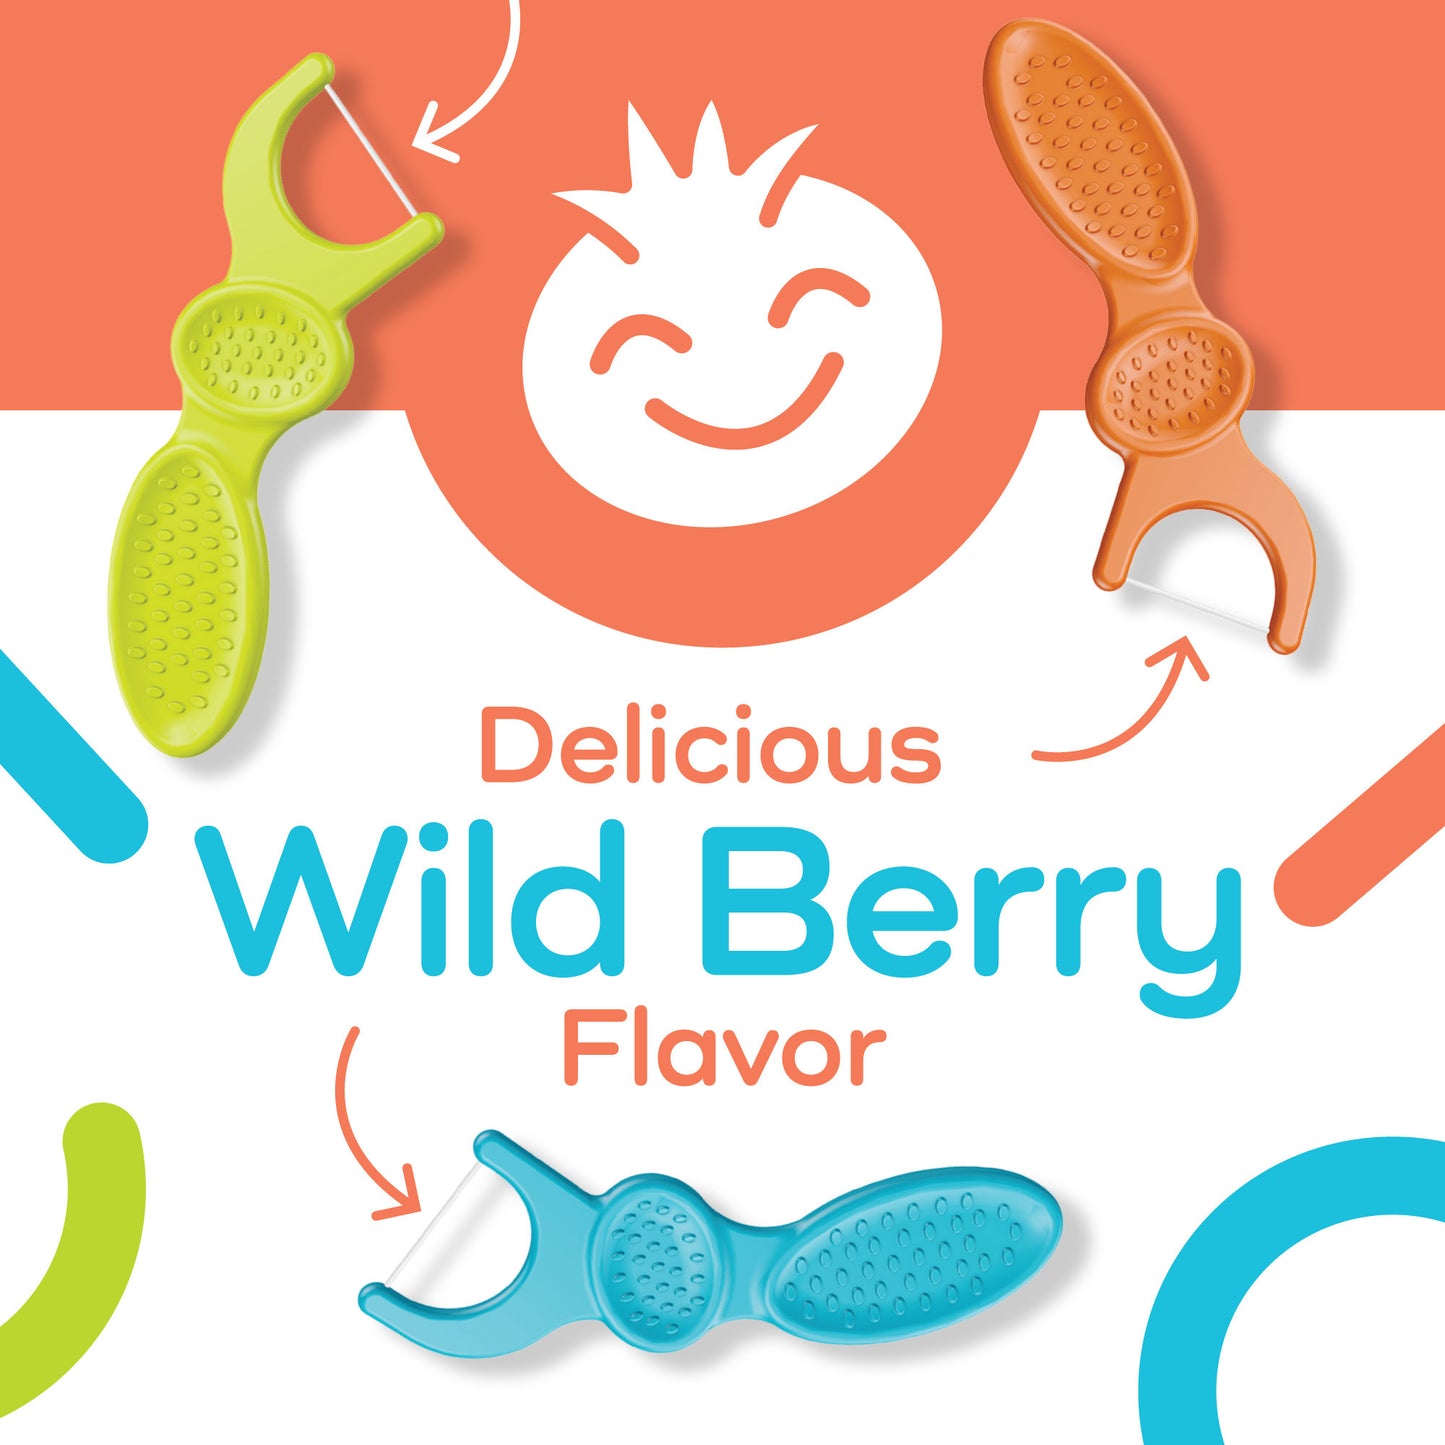 Delicious Wild Berry flavor